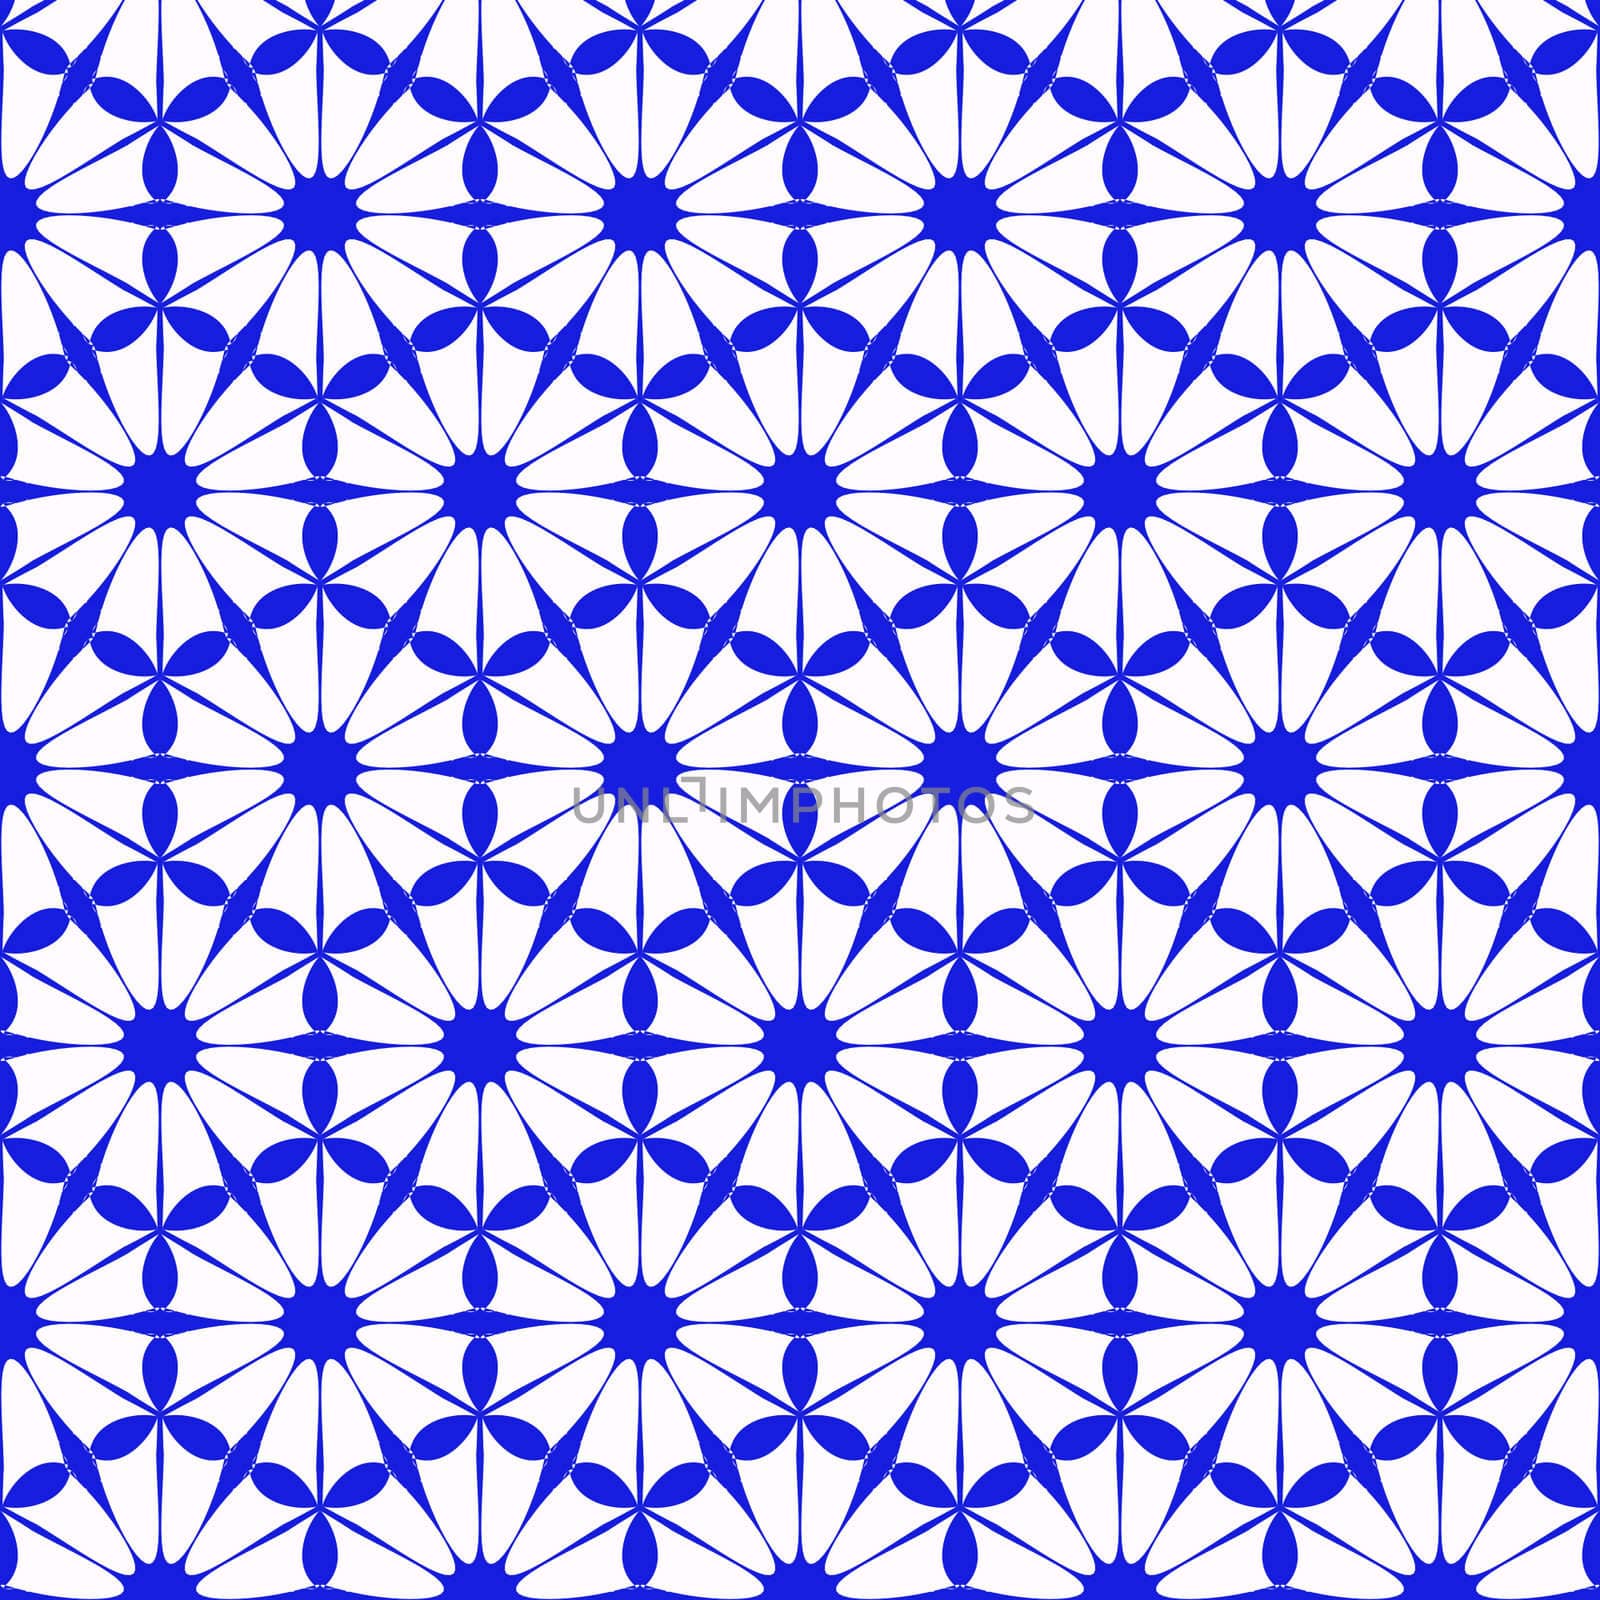 Seamless blue wallpaper pattern by Nickondr